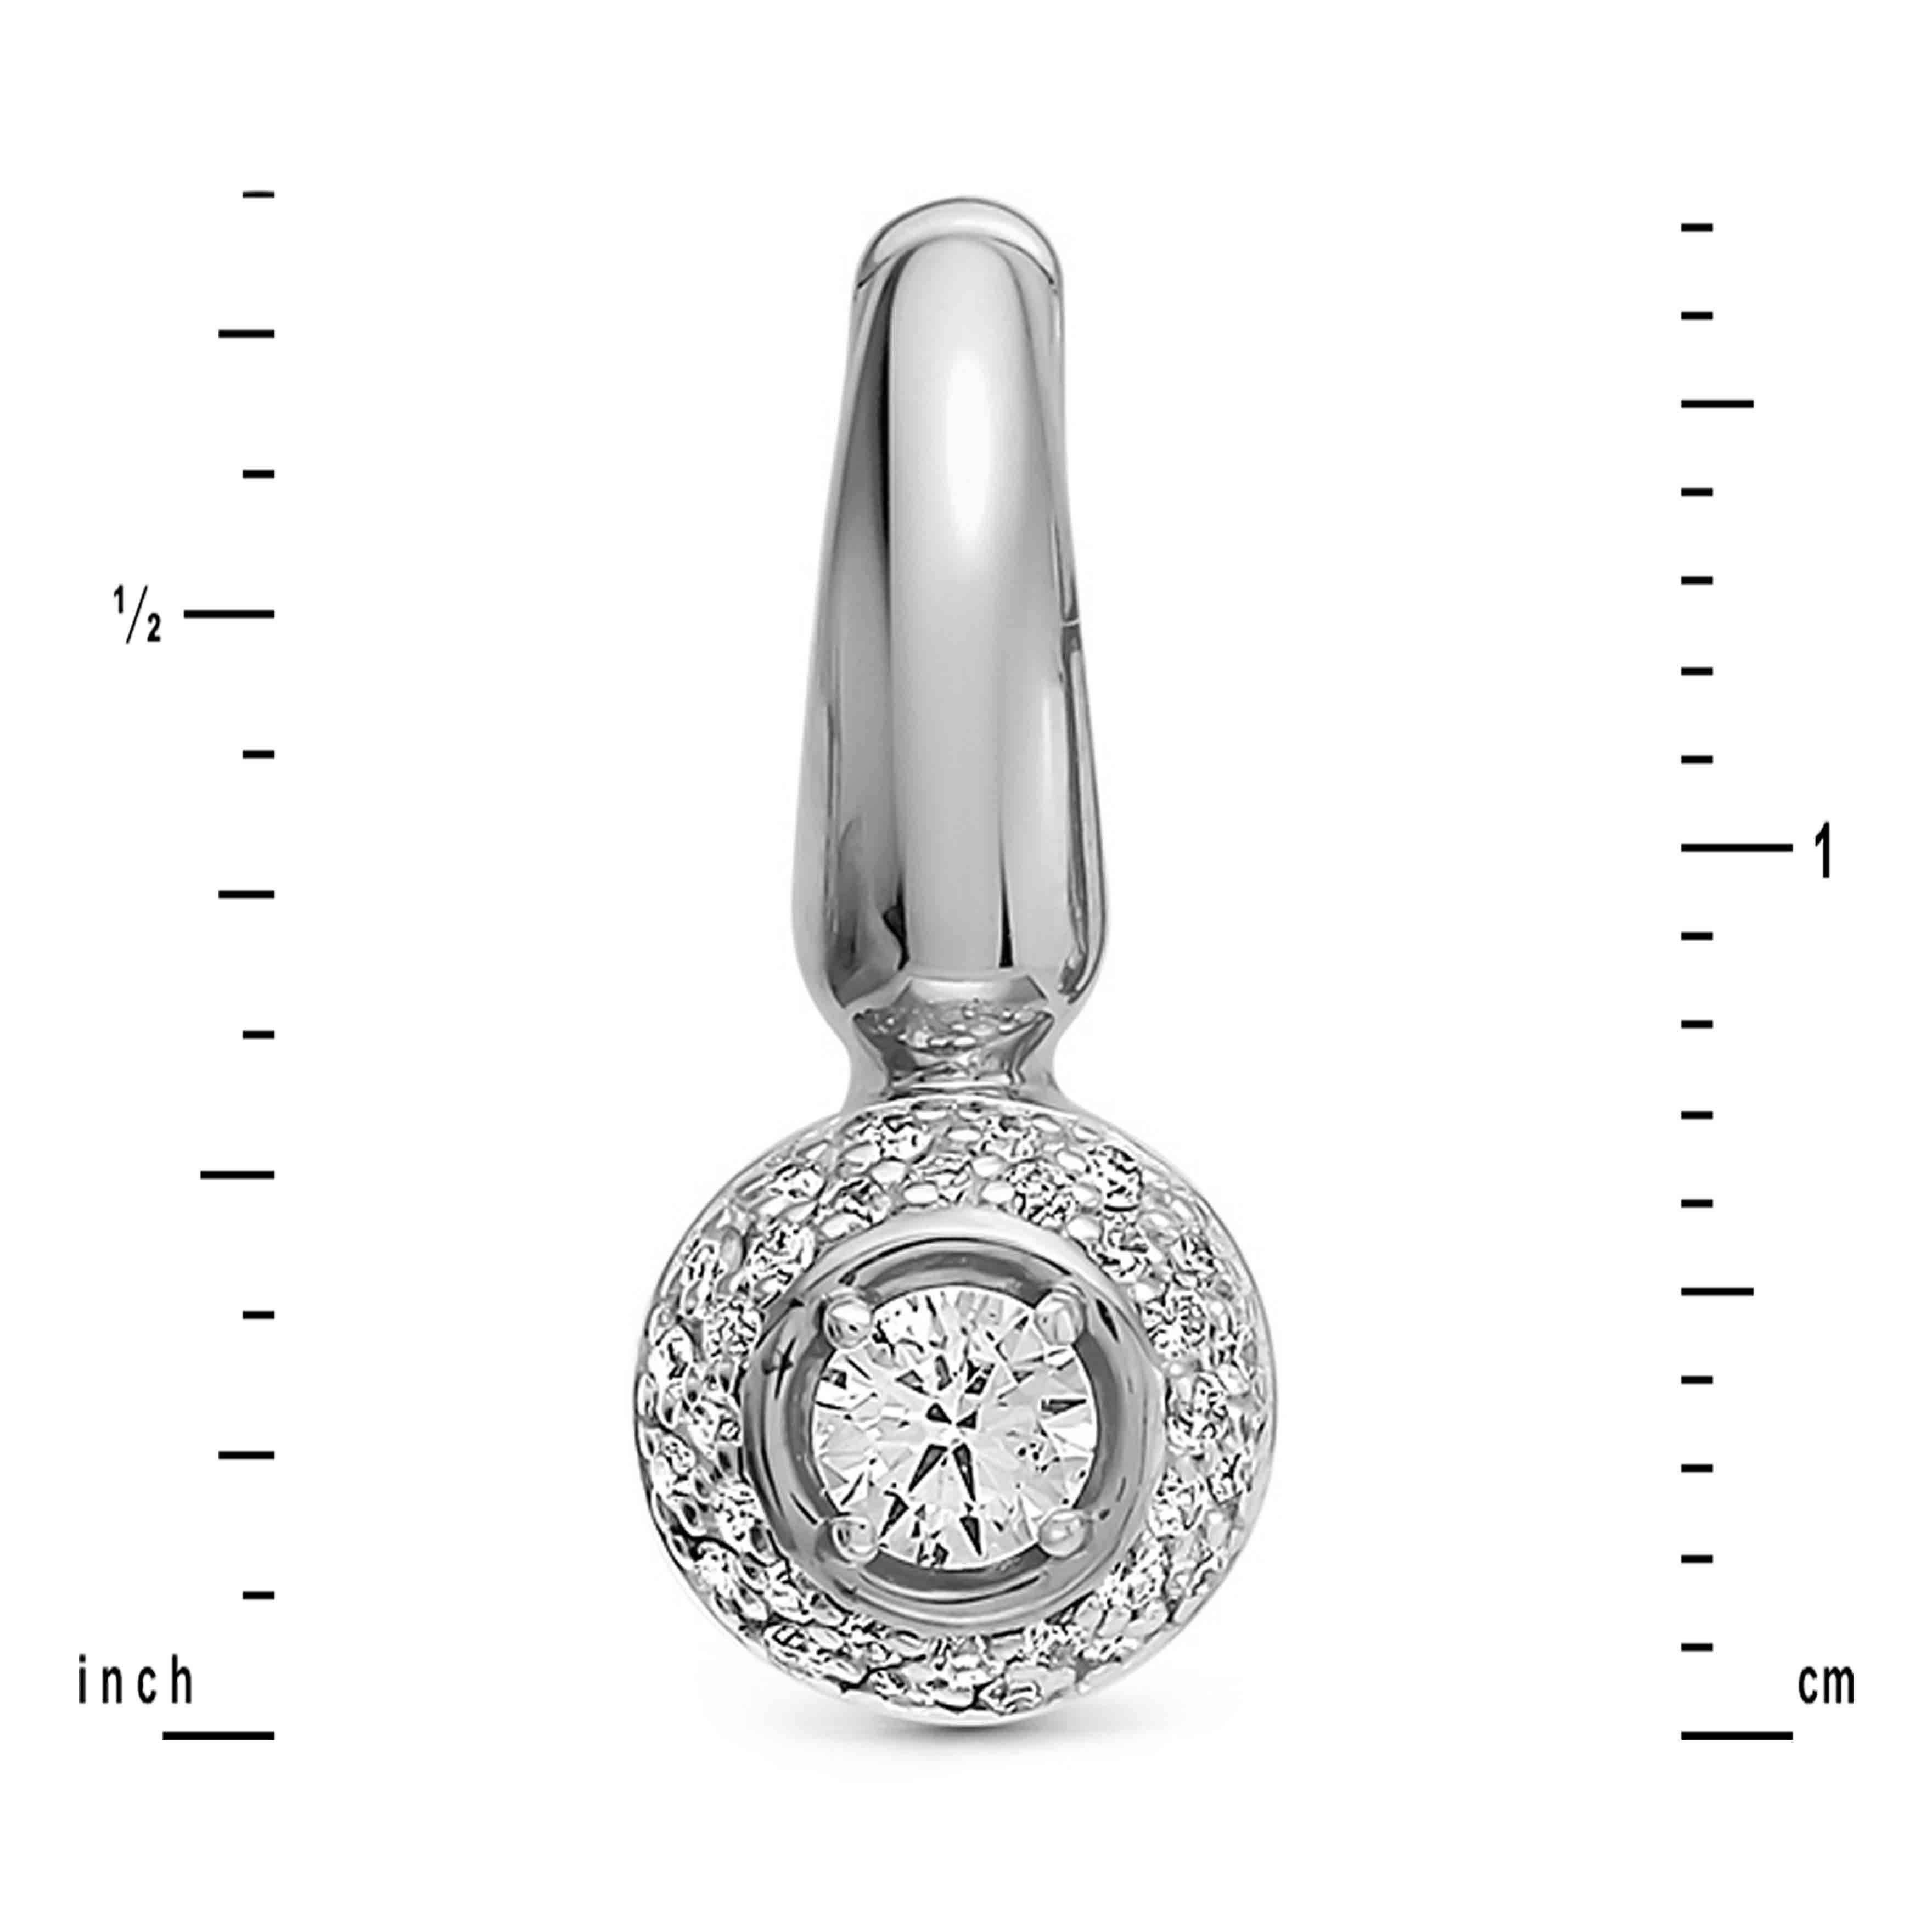 Diamond Leverback Earrings. Certified 585 (14kt) White Gold, Rhodium Finish. Iconic Design Diamond Leverback Earrings